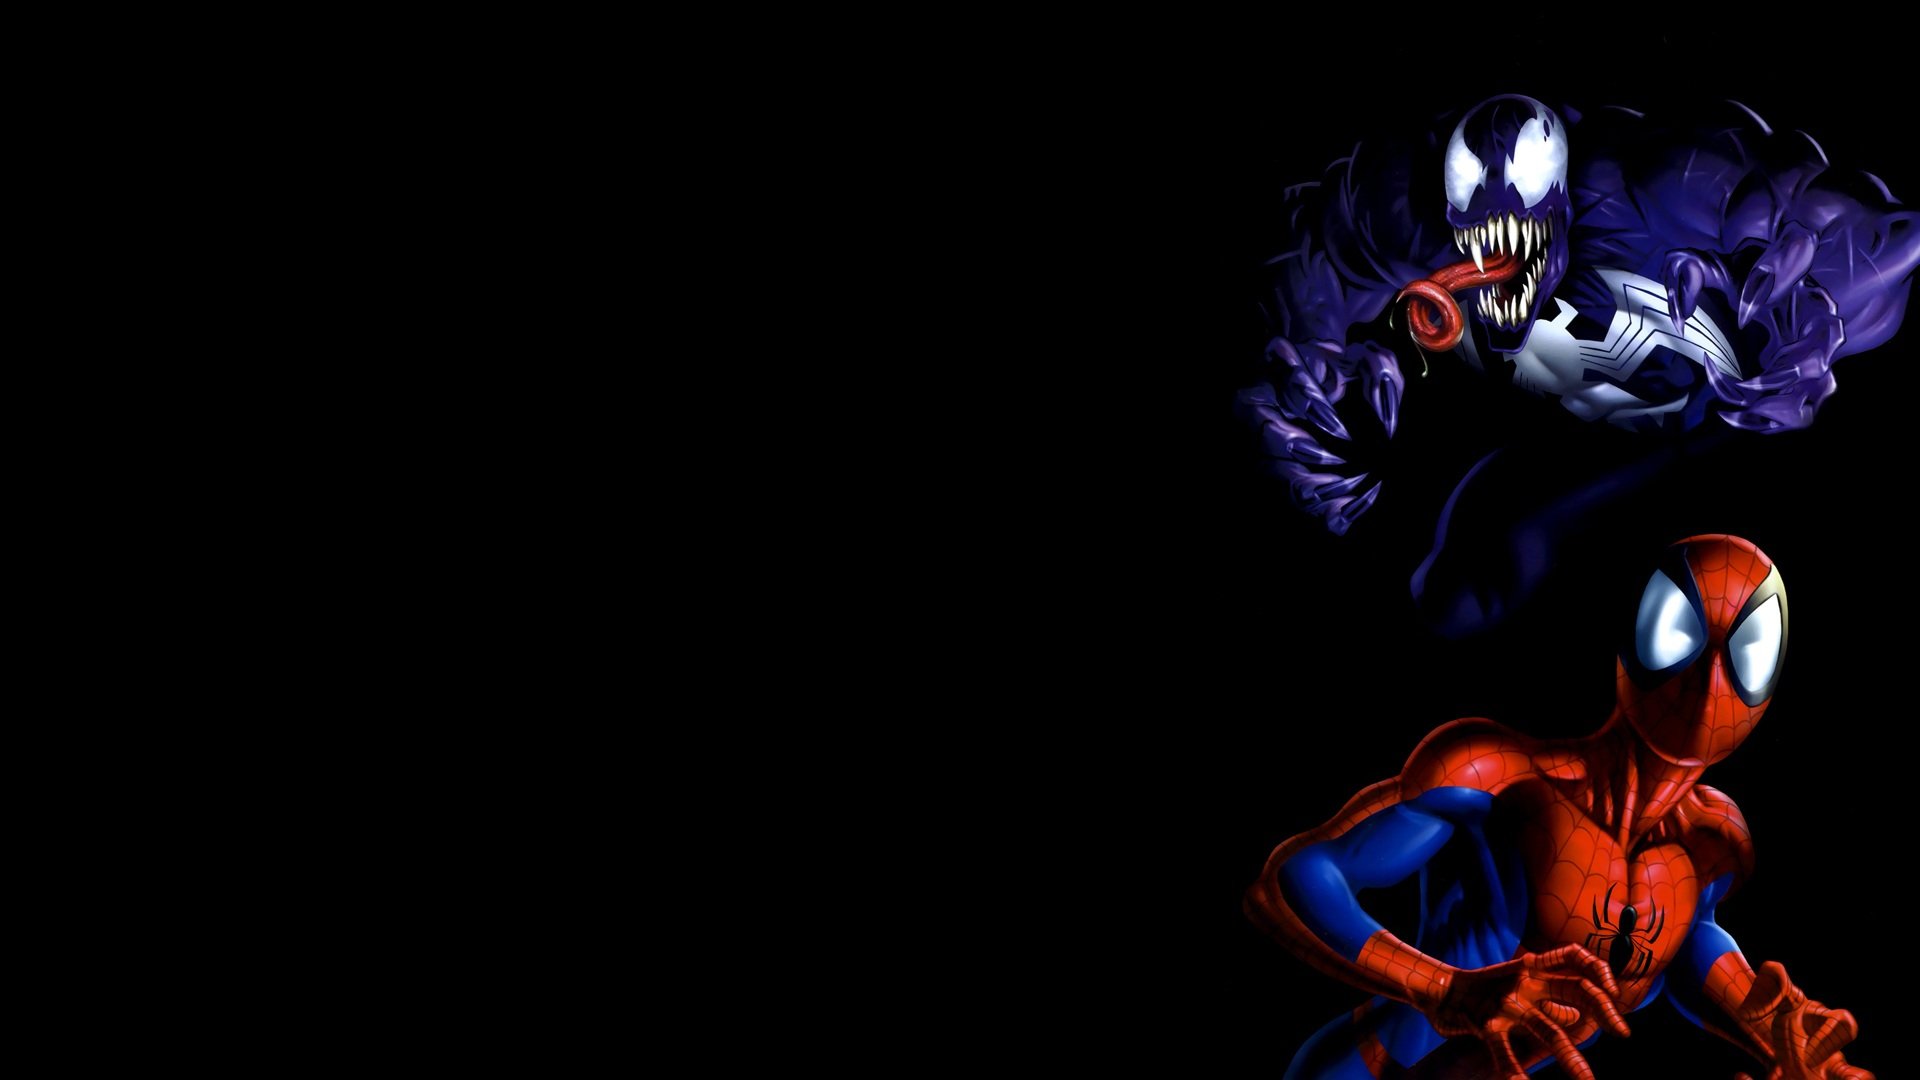 Venom Spider man Wallpaper 1920x1080 Venom Spiderman Marvel Comics